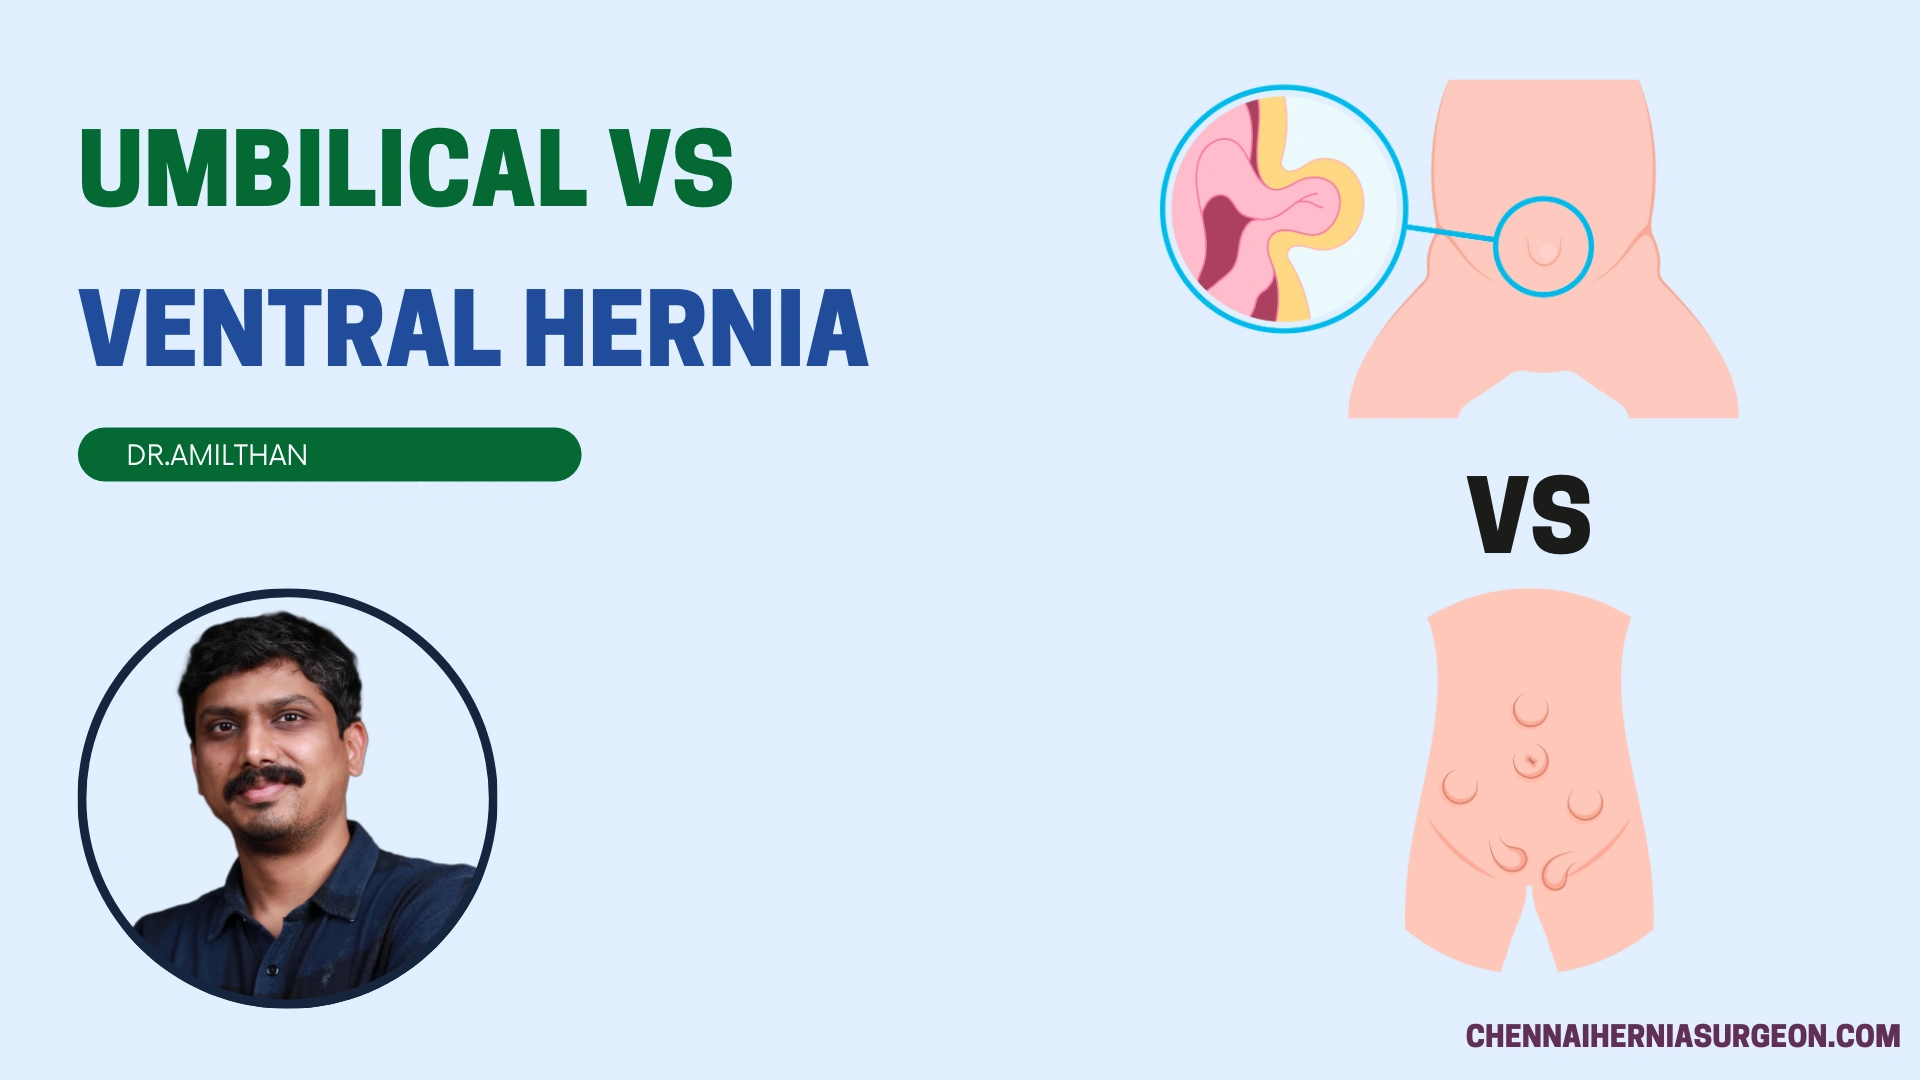 Umbilical vs Ventral hernia